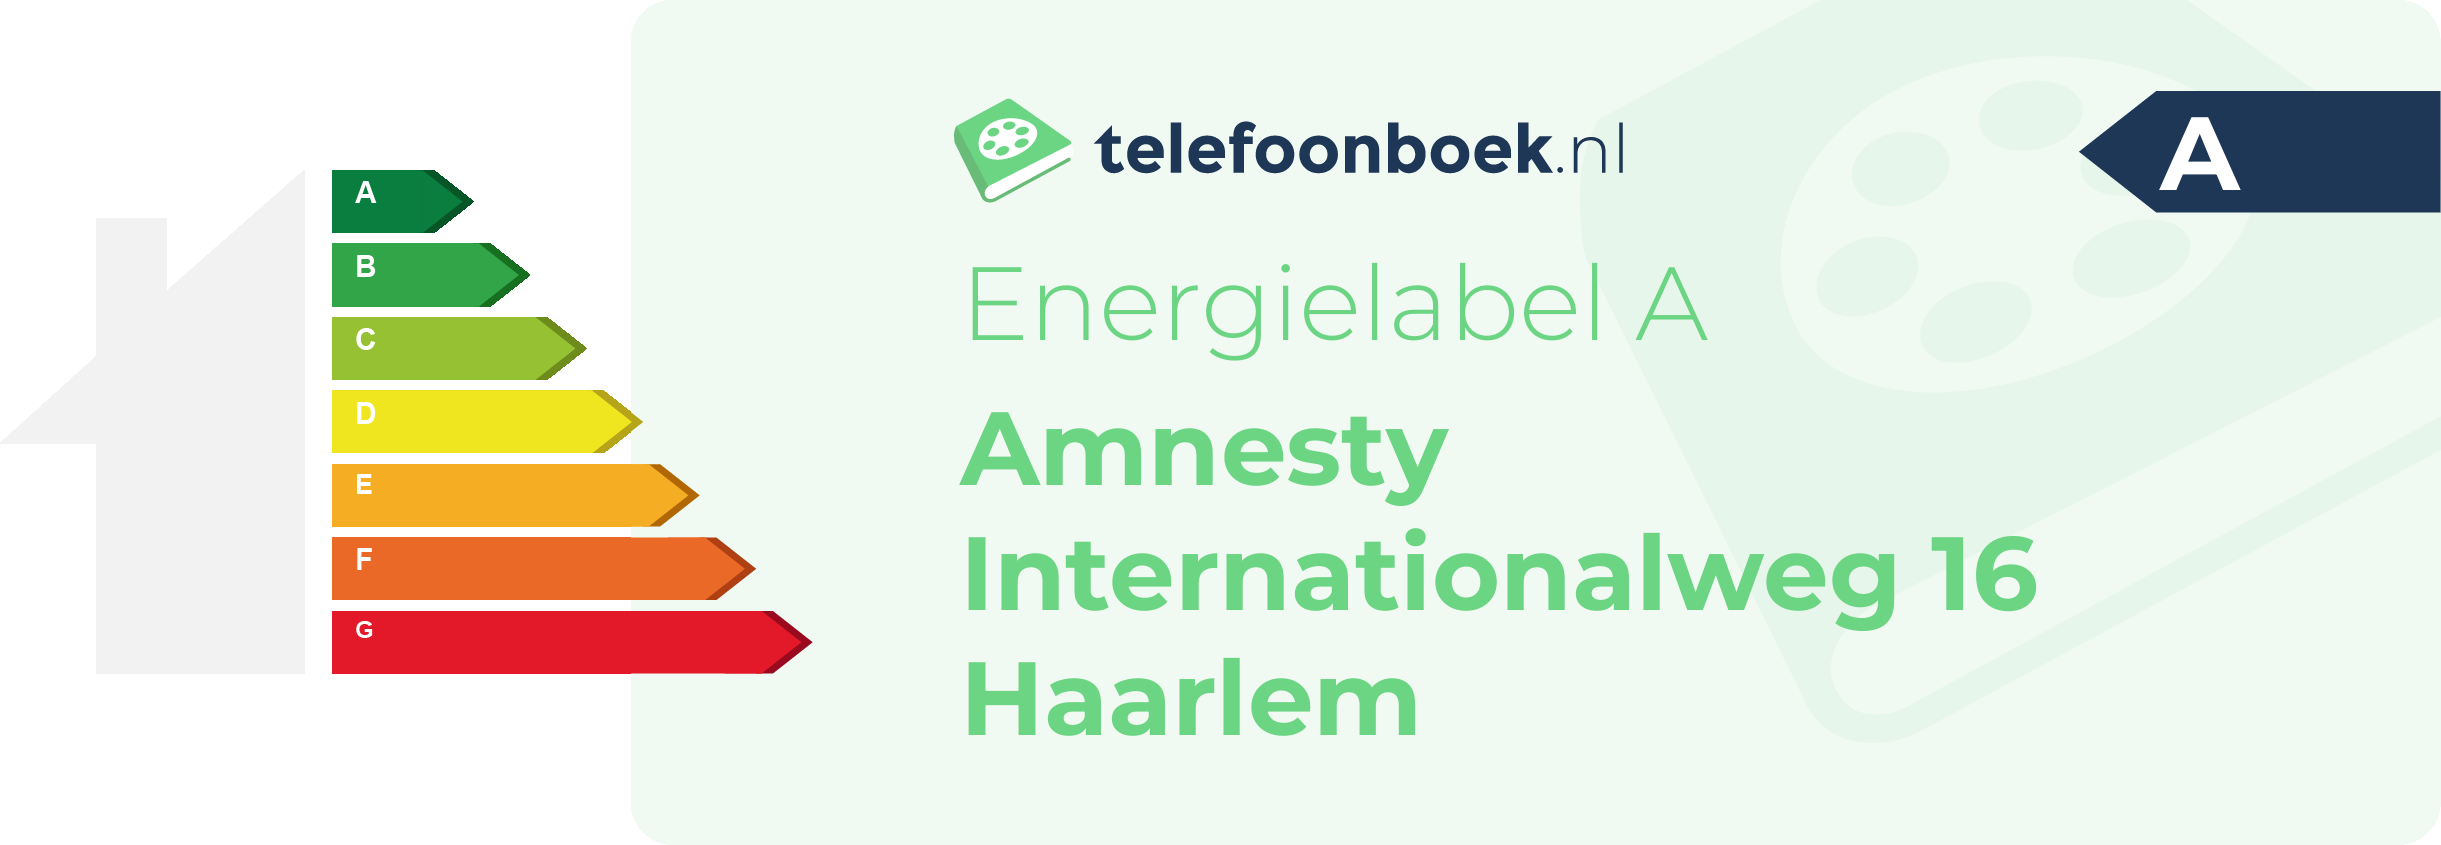 Energielabel Amnesty Internationalweg 16 Haarlem